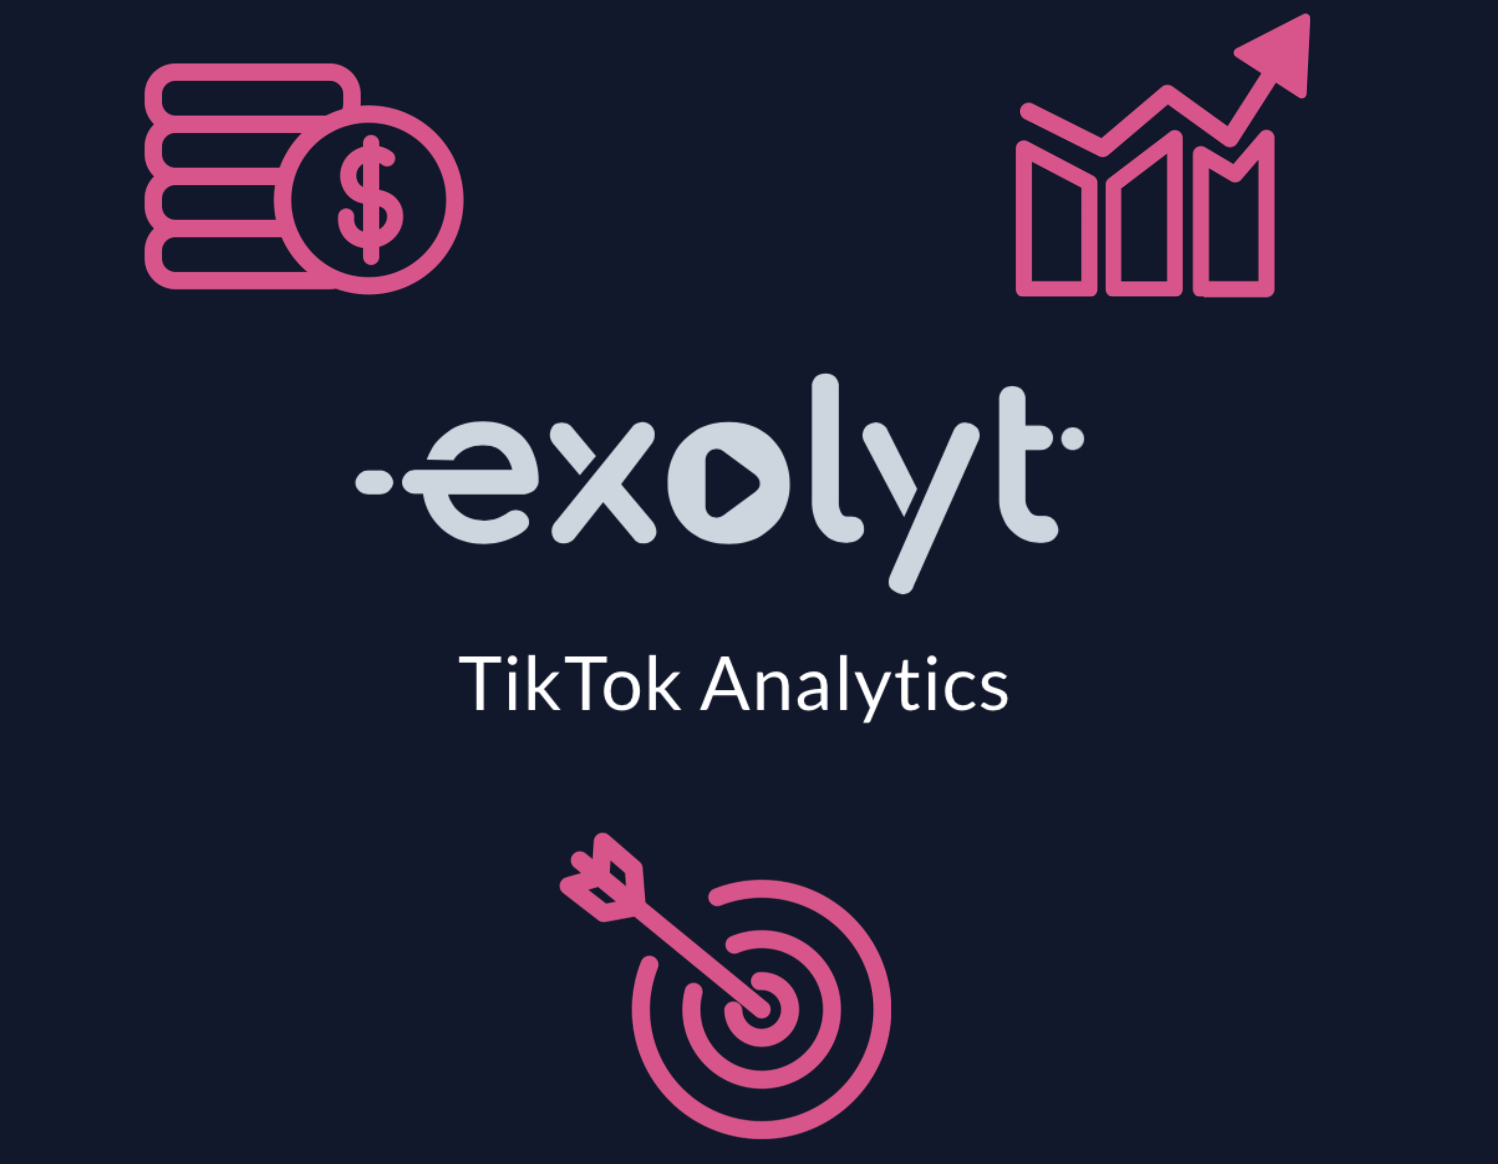 Why media agencies should use Exolyt for TikTok analytics